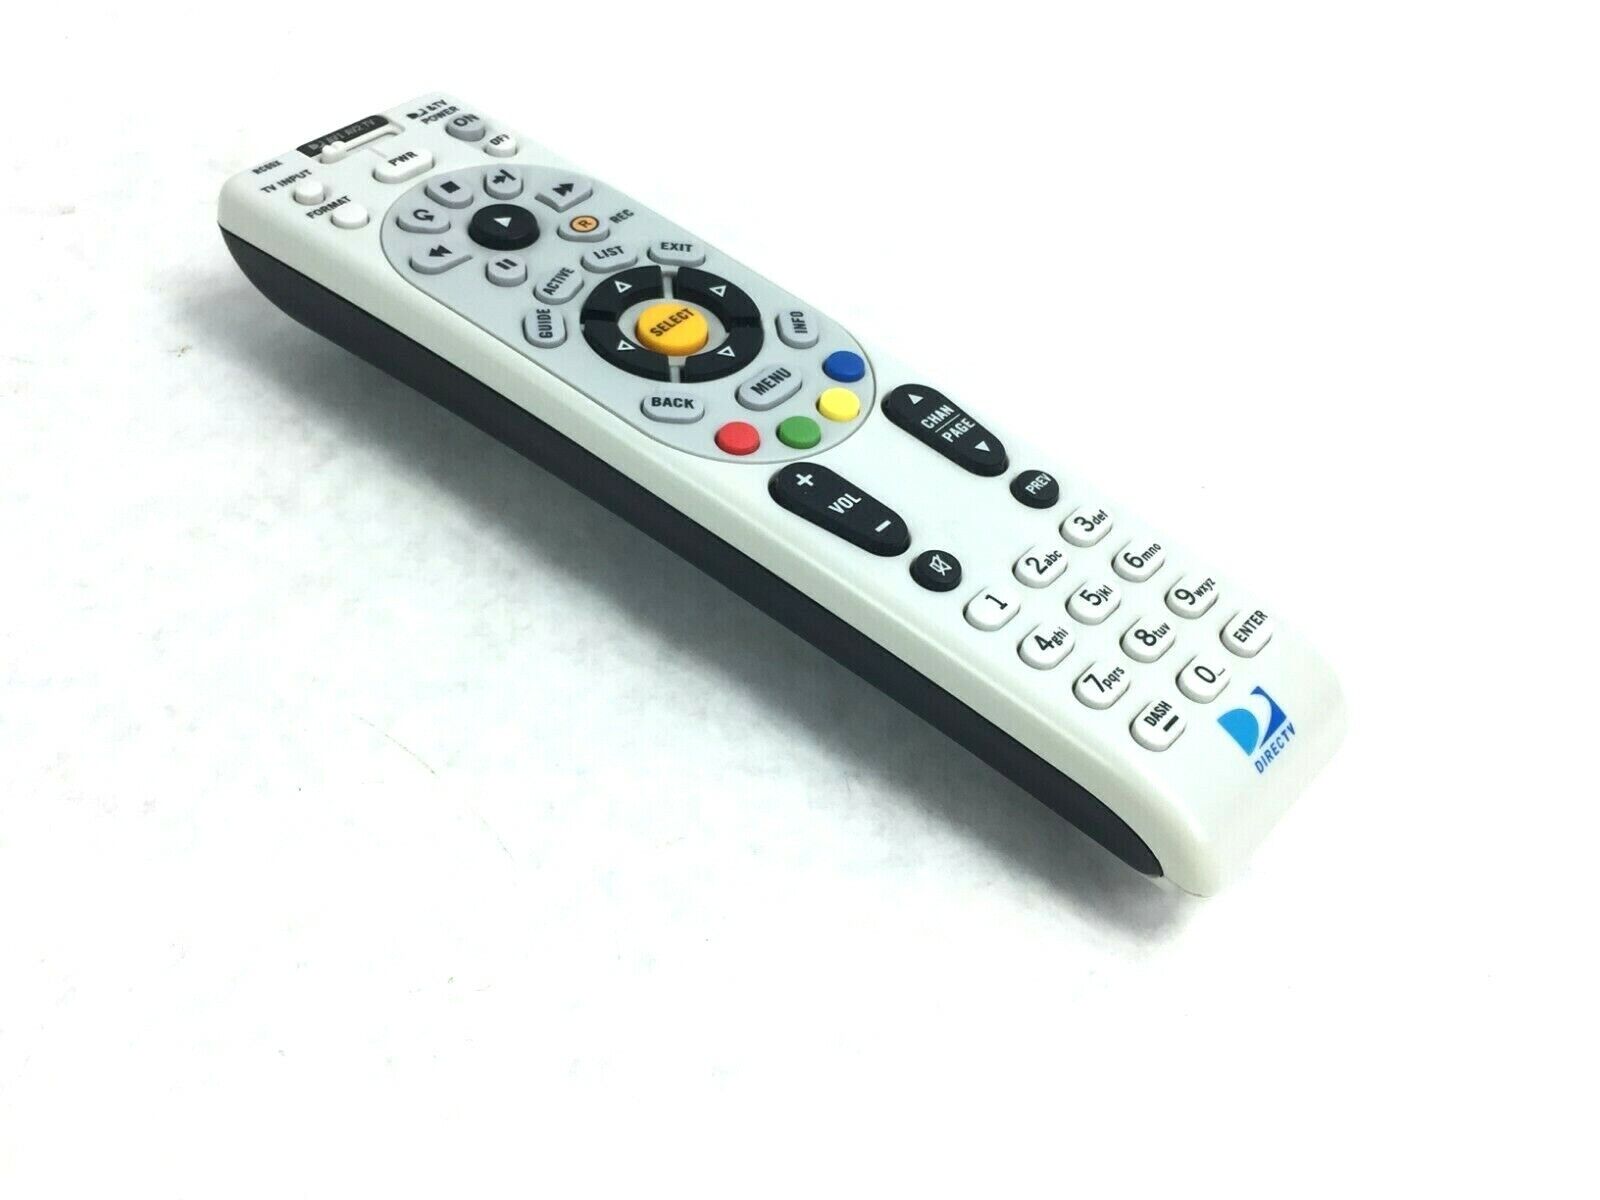 Direct TV RC65X Universal IR HD DVR Remote Control